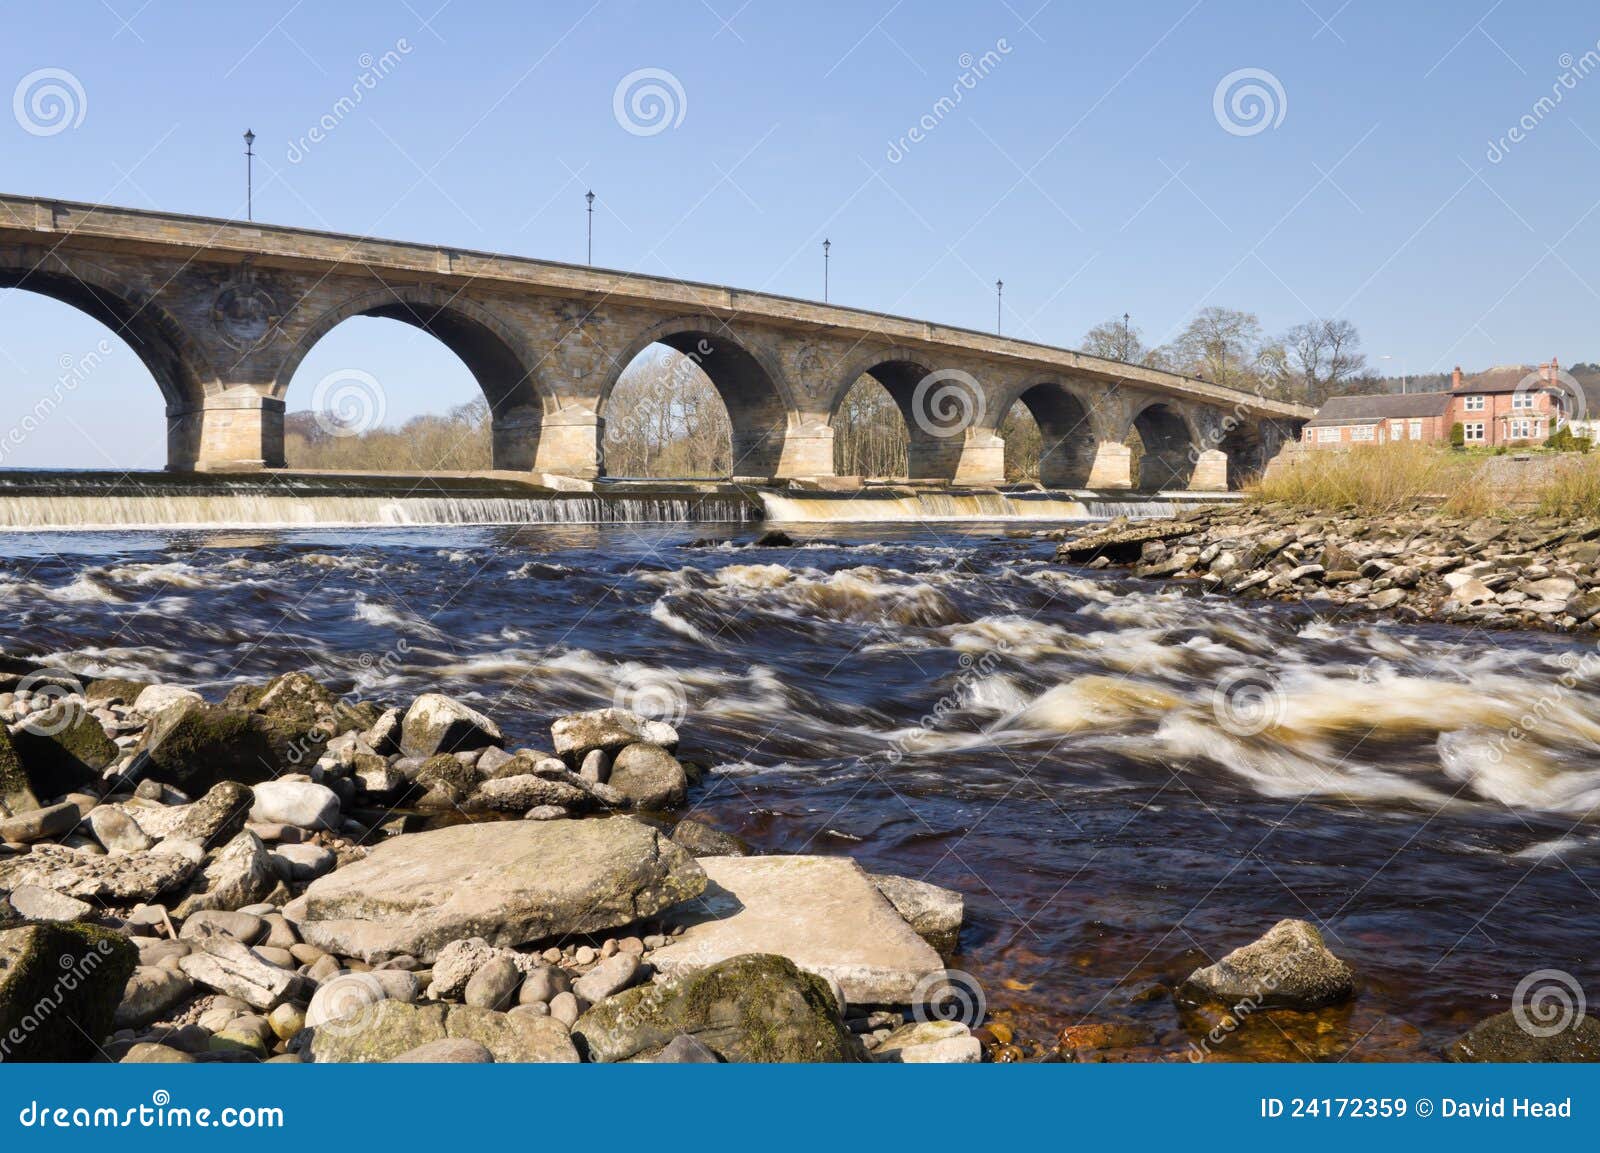 hexham bridge and rapids